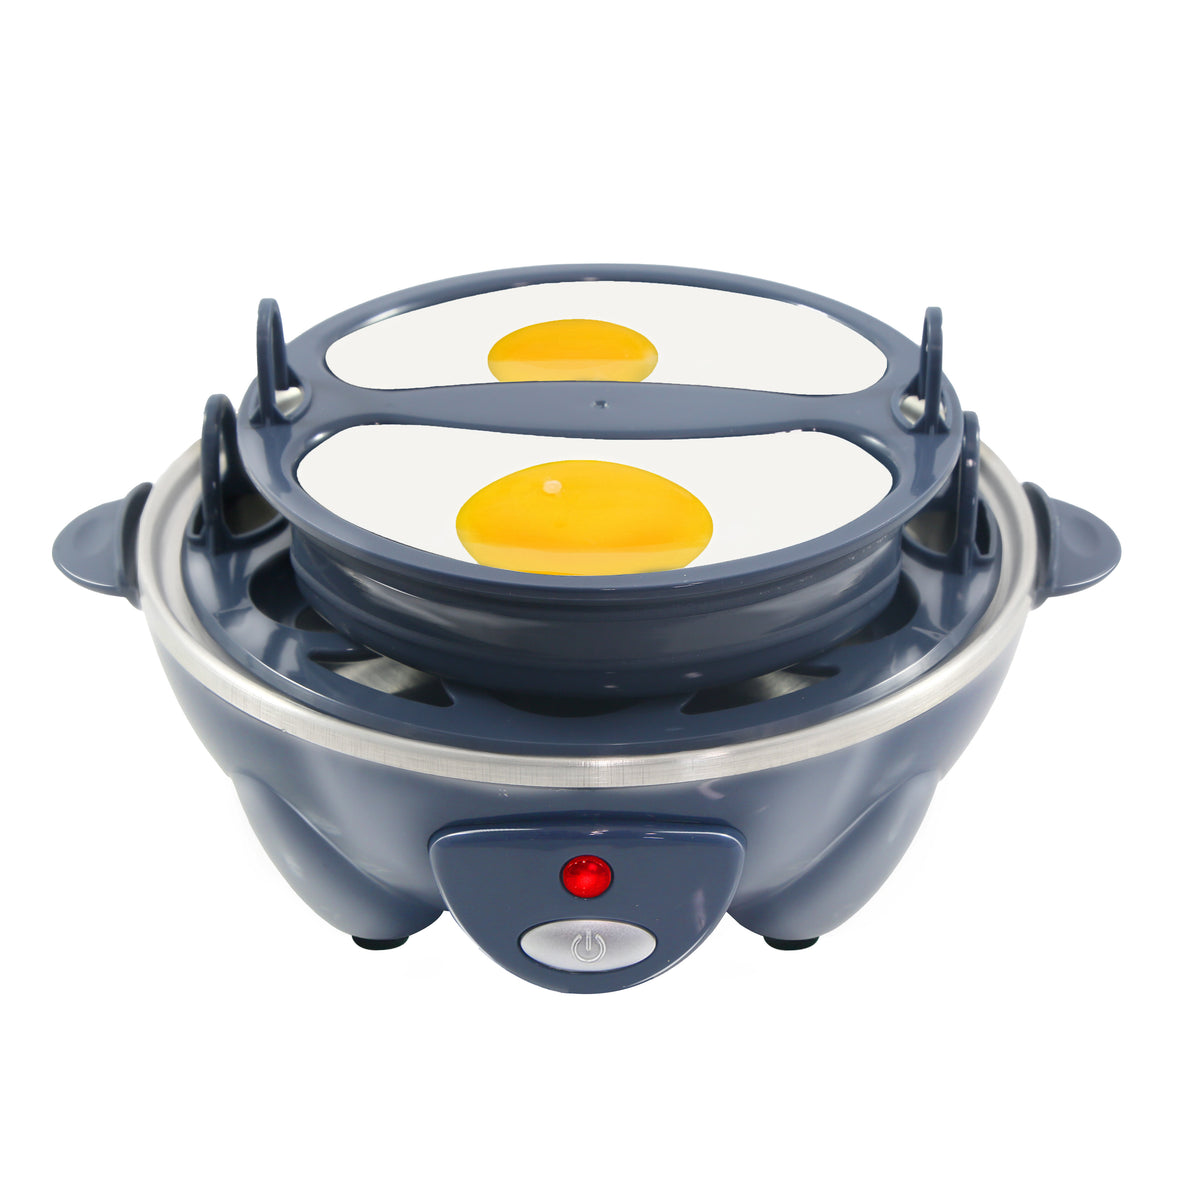 Gourmet Egg Cooker I Chef'sChoice Model 810 - Default Title